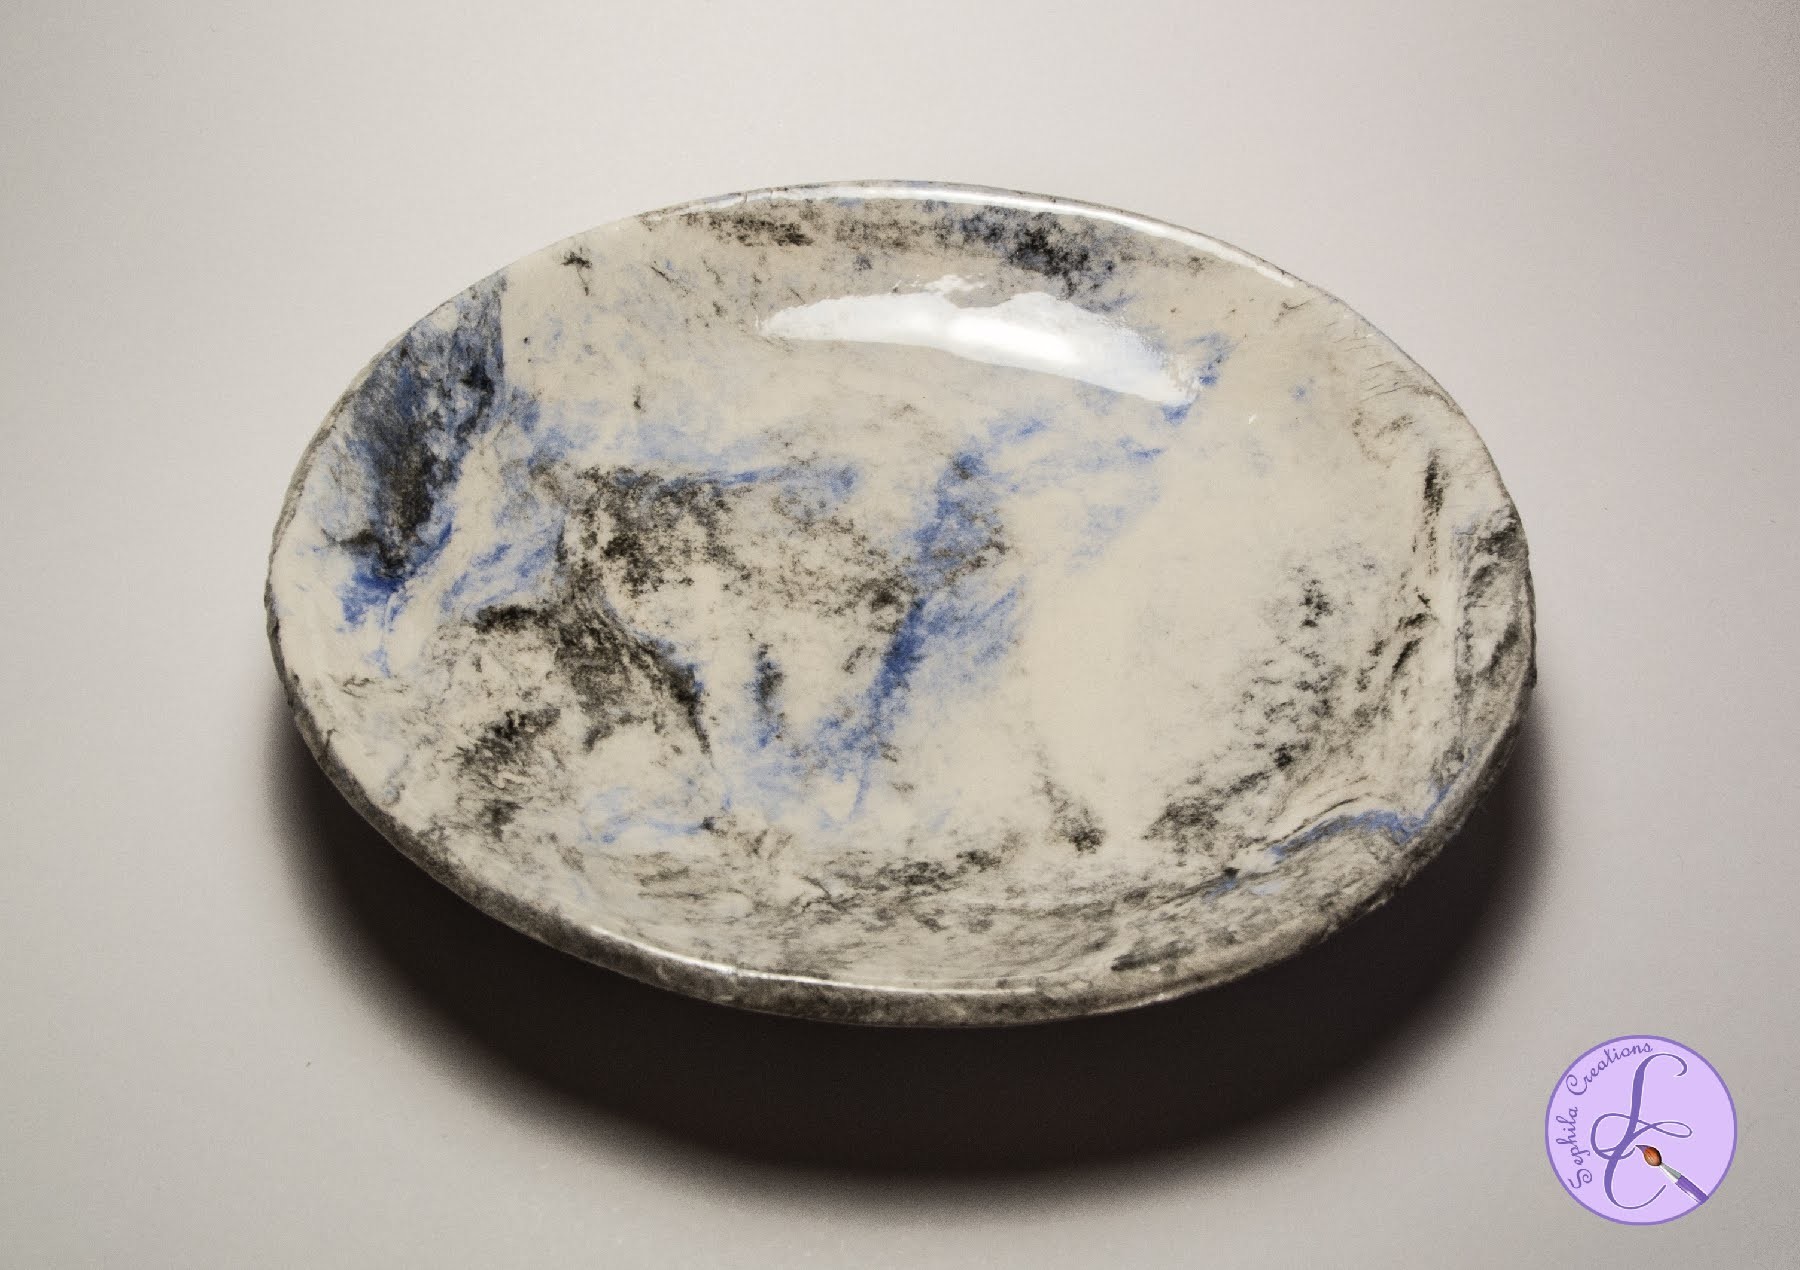 Tutorial: Ciotola Effetto Marmo in Das Idea Mix (marble effect DAS bowl)